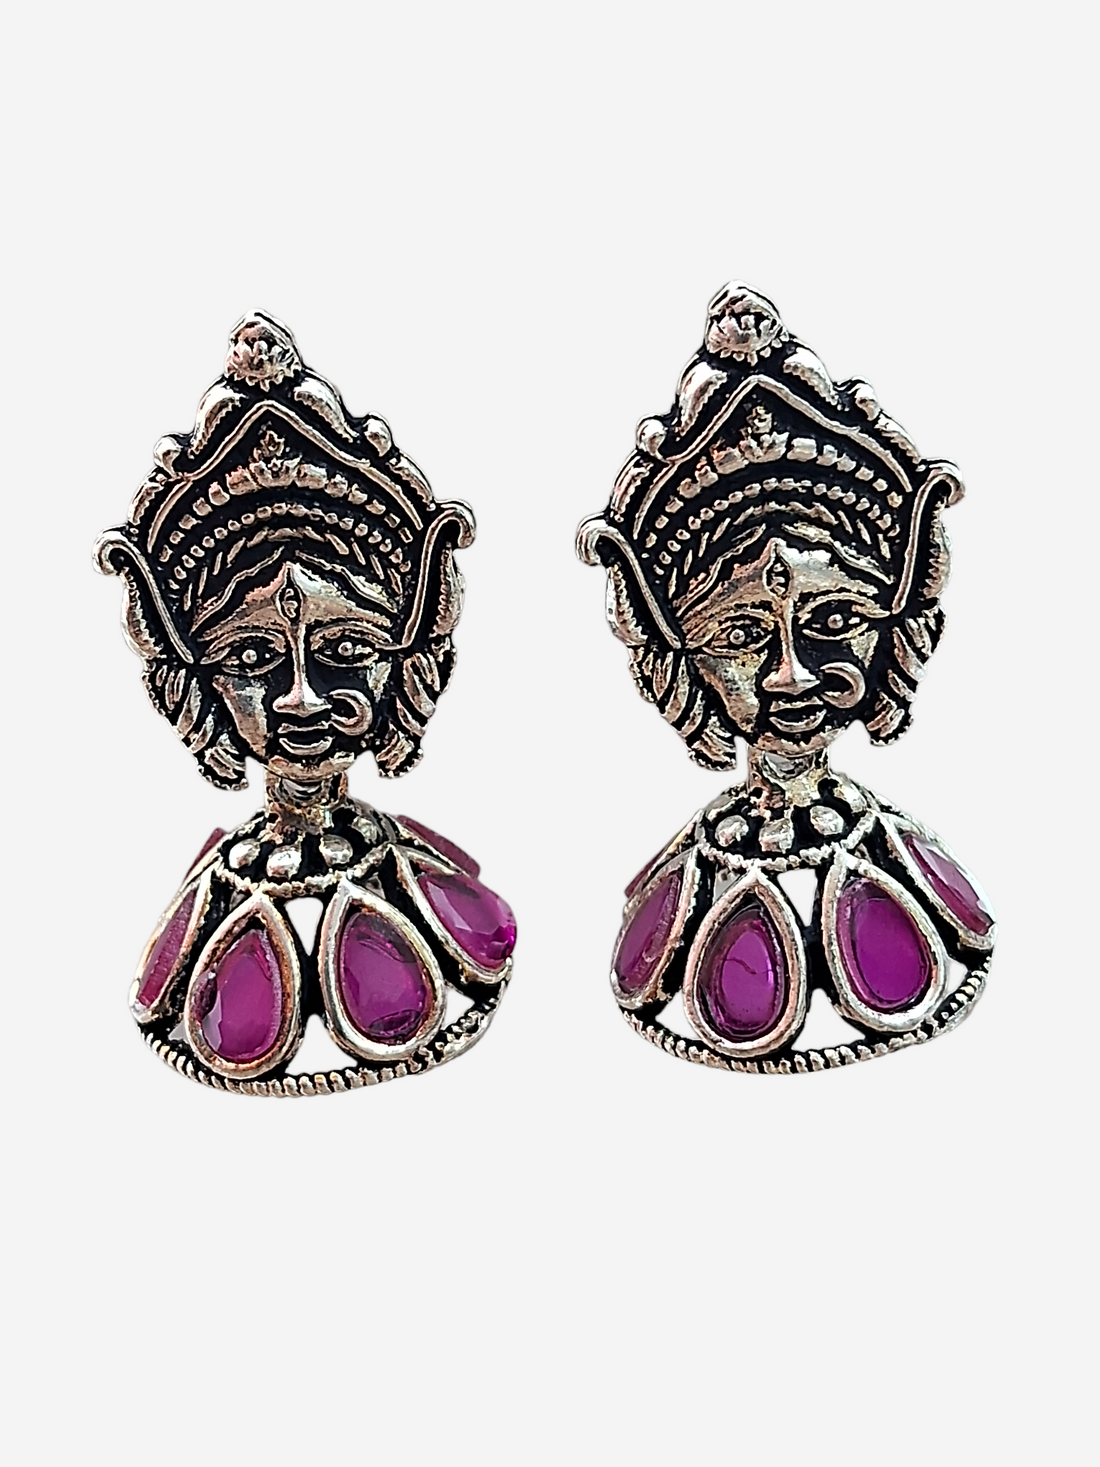 Maa Durga Face Jhumki, Silver Plated Earrings, Ruby